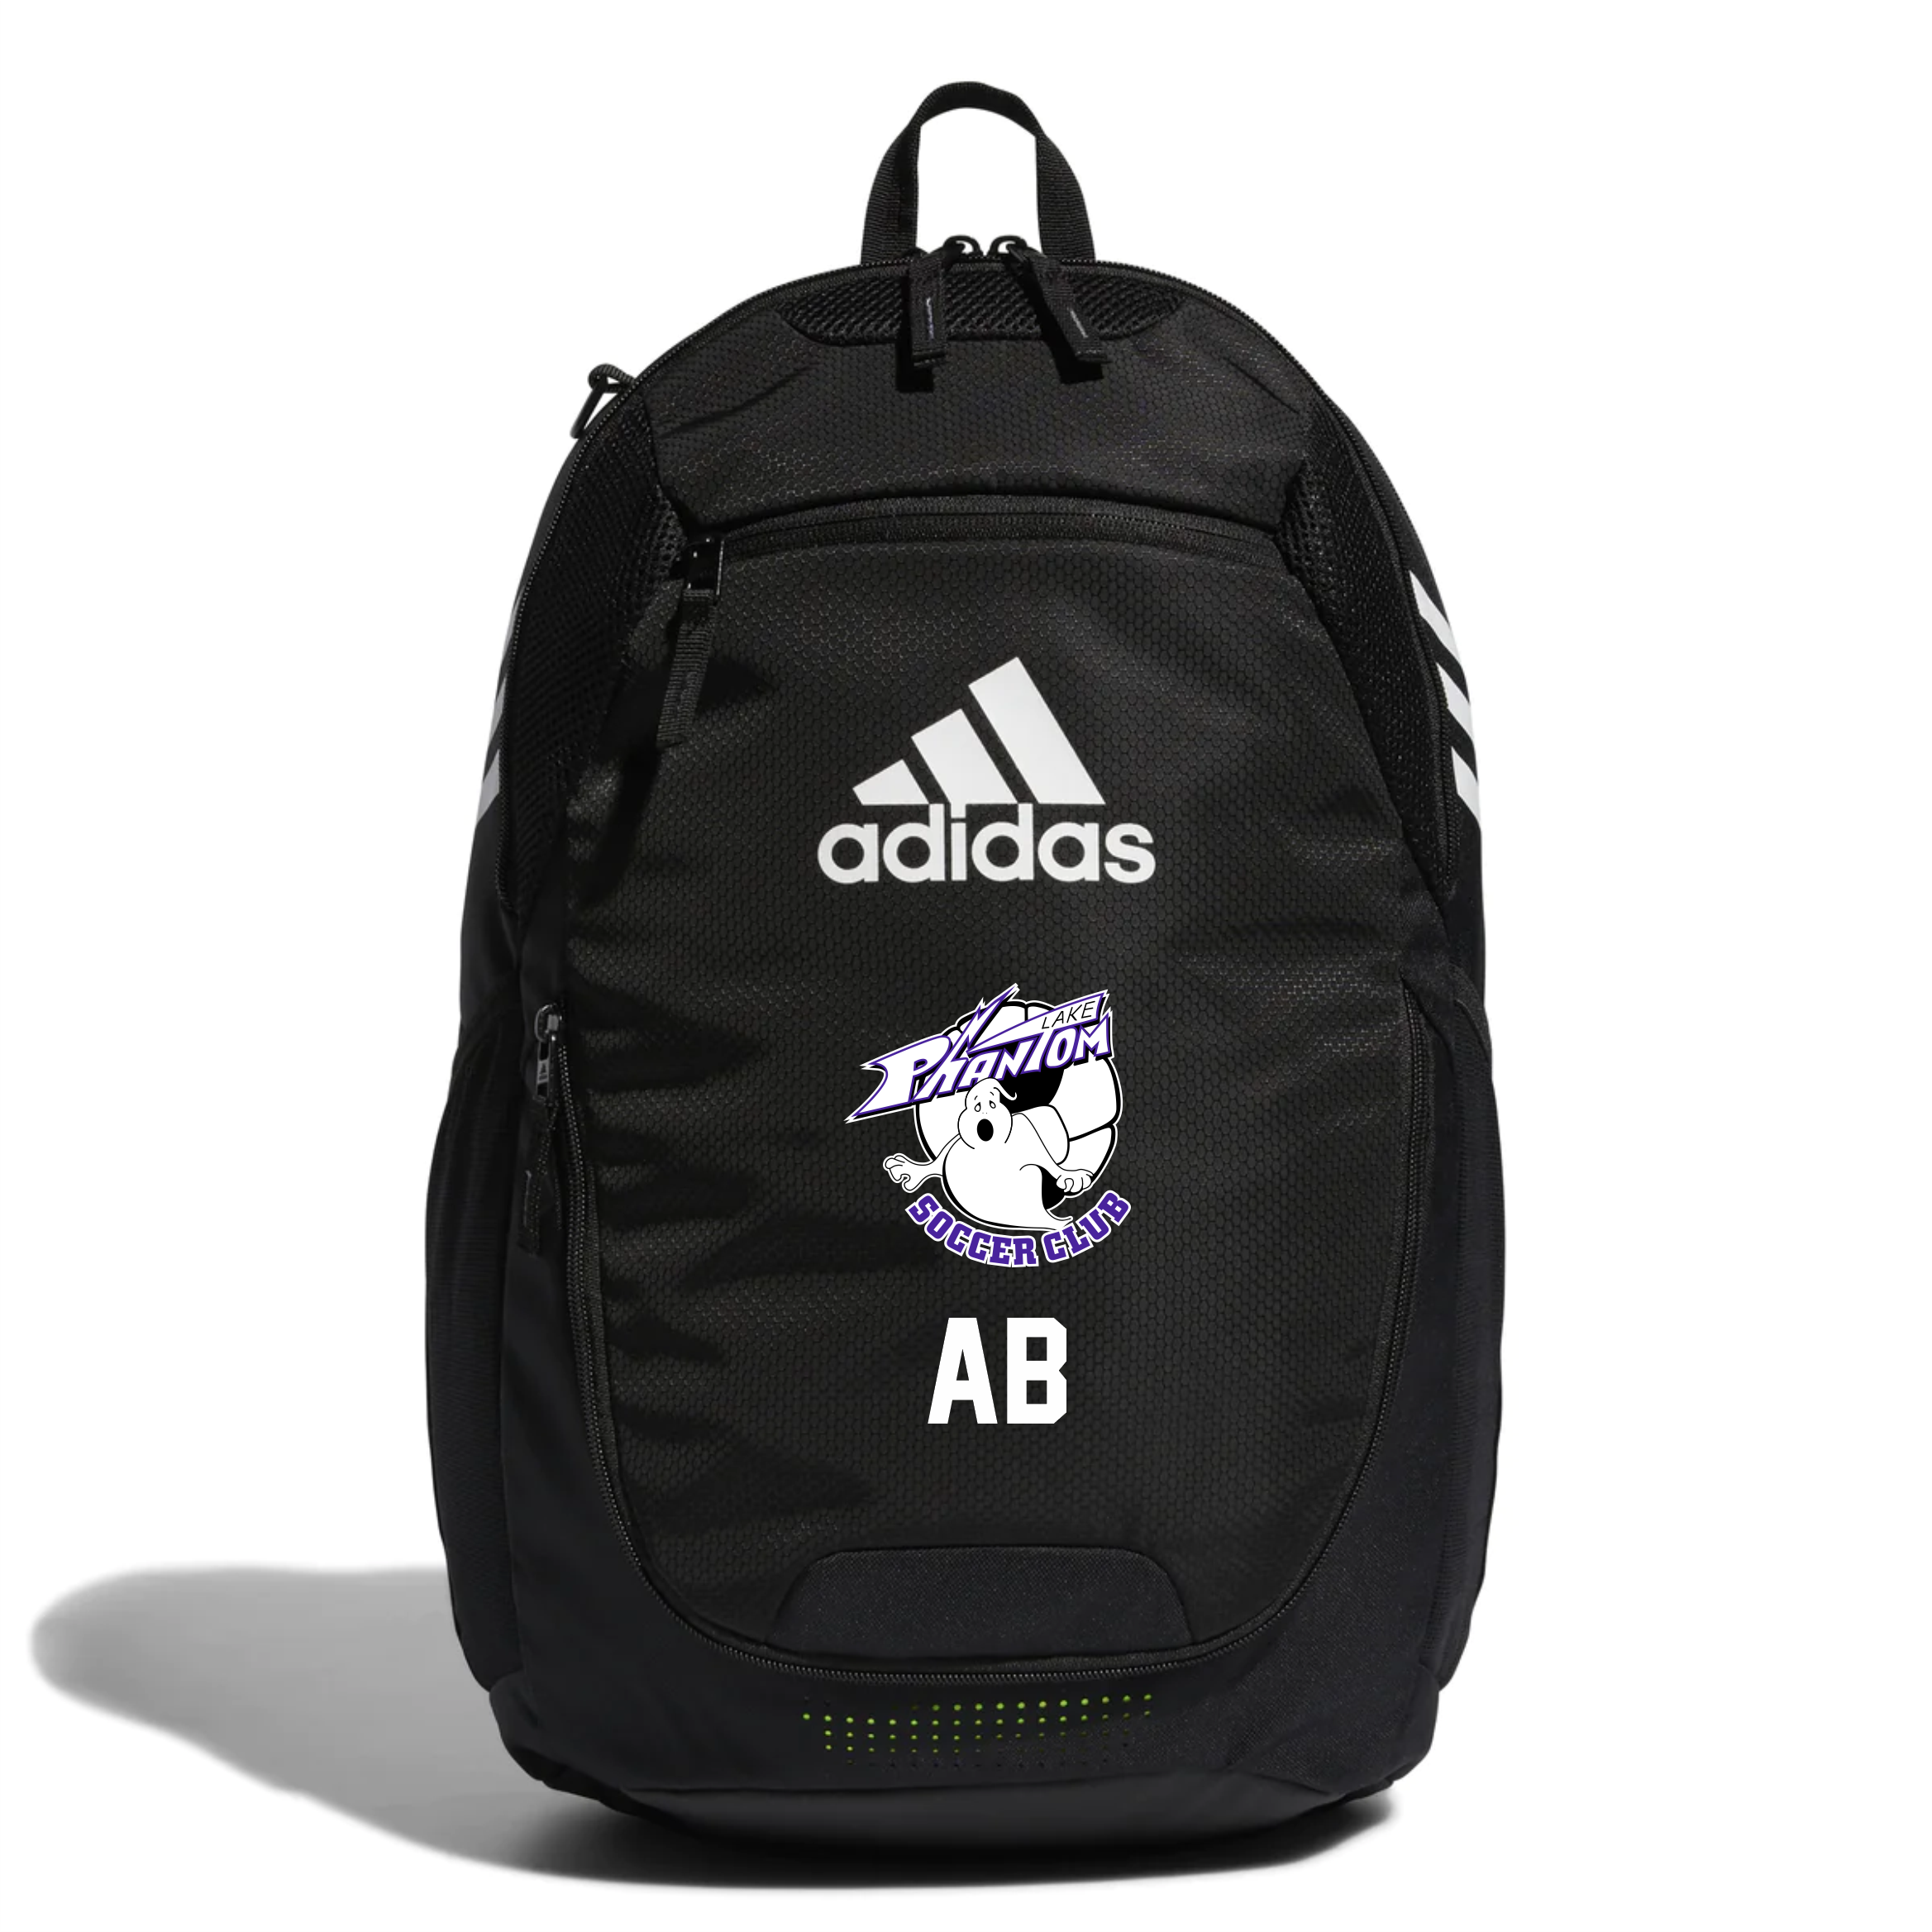 Adidas Stadium Backpack (Phantom Lake)